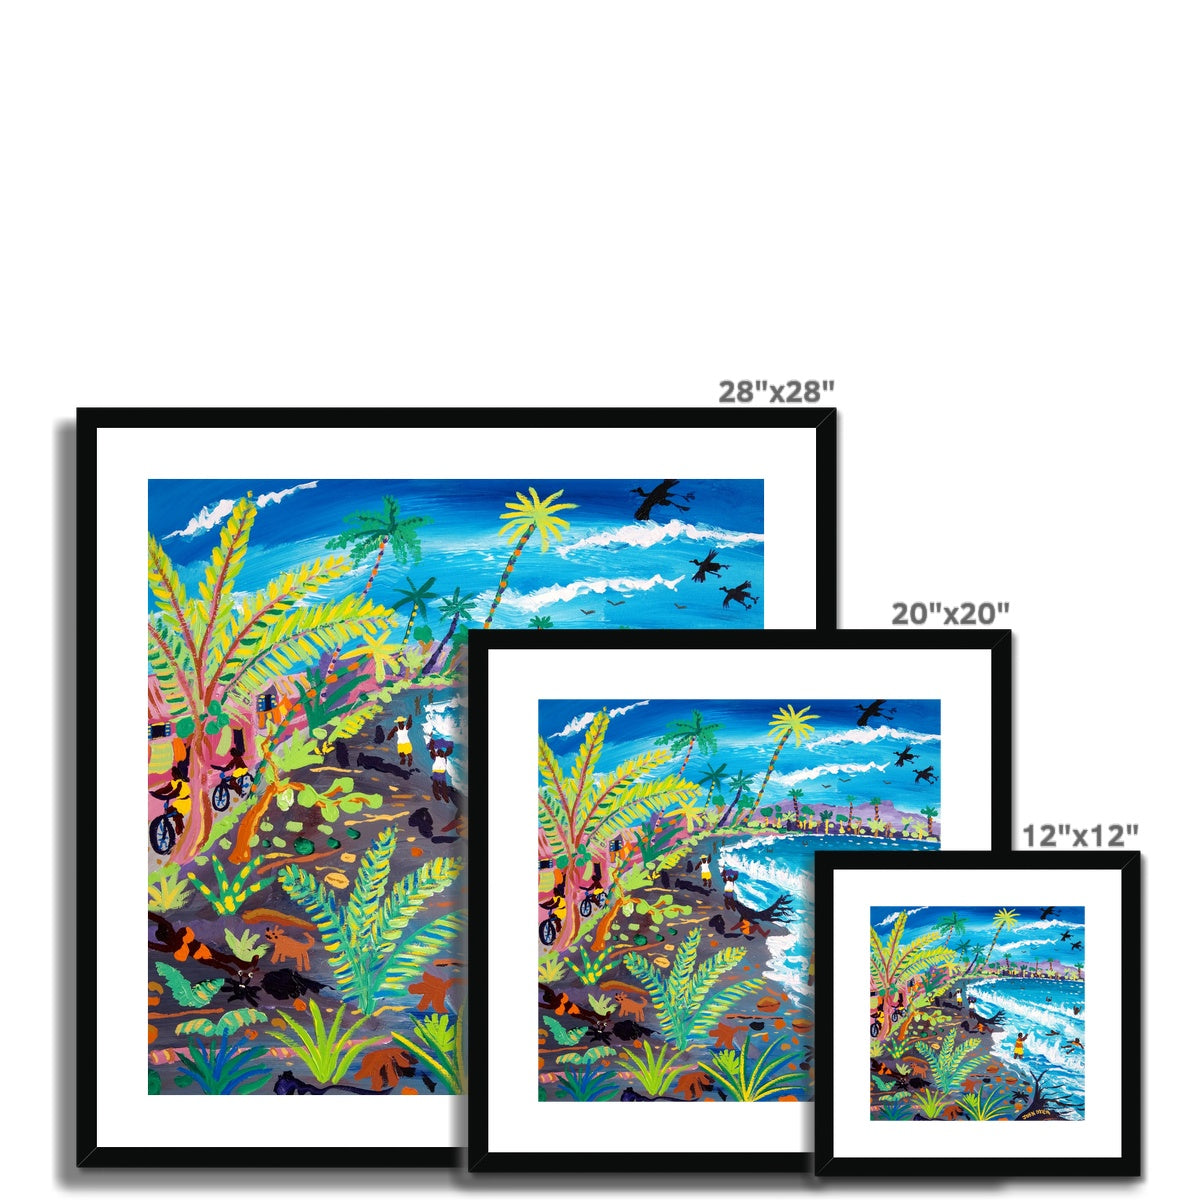 John Dyer Framed Open Edition Cornish Art Print. &#39;Caribbean Beach Life, Costa Rica&#39;. Caribbean Art Gallery